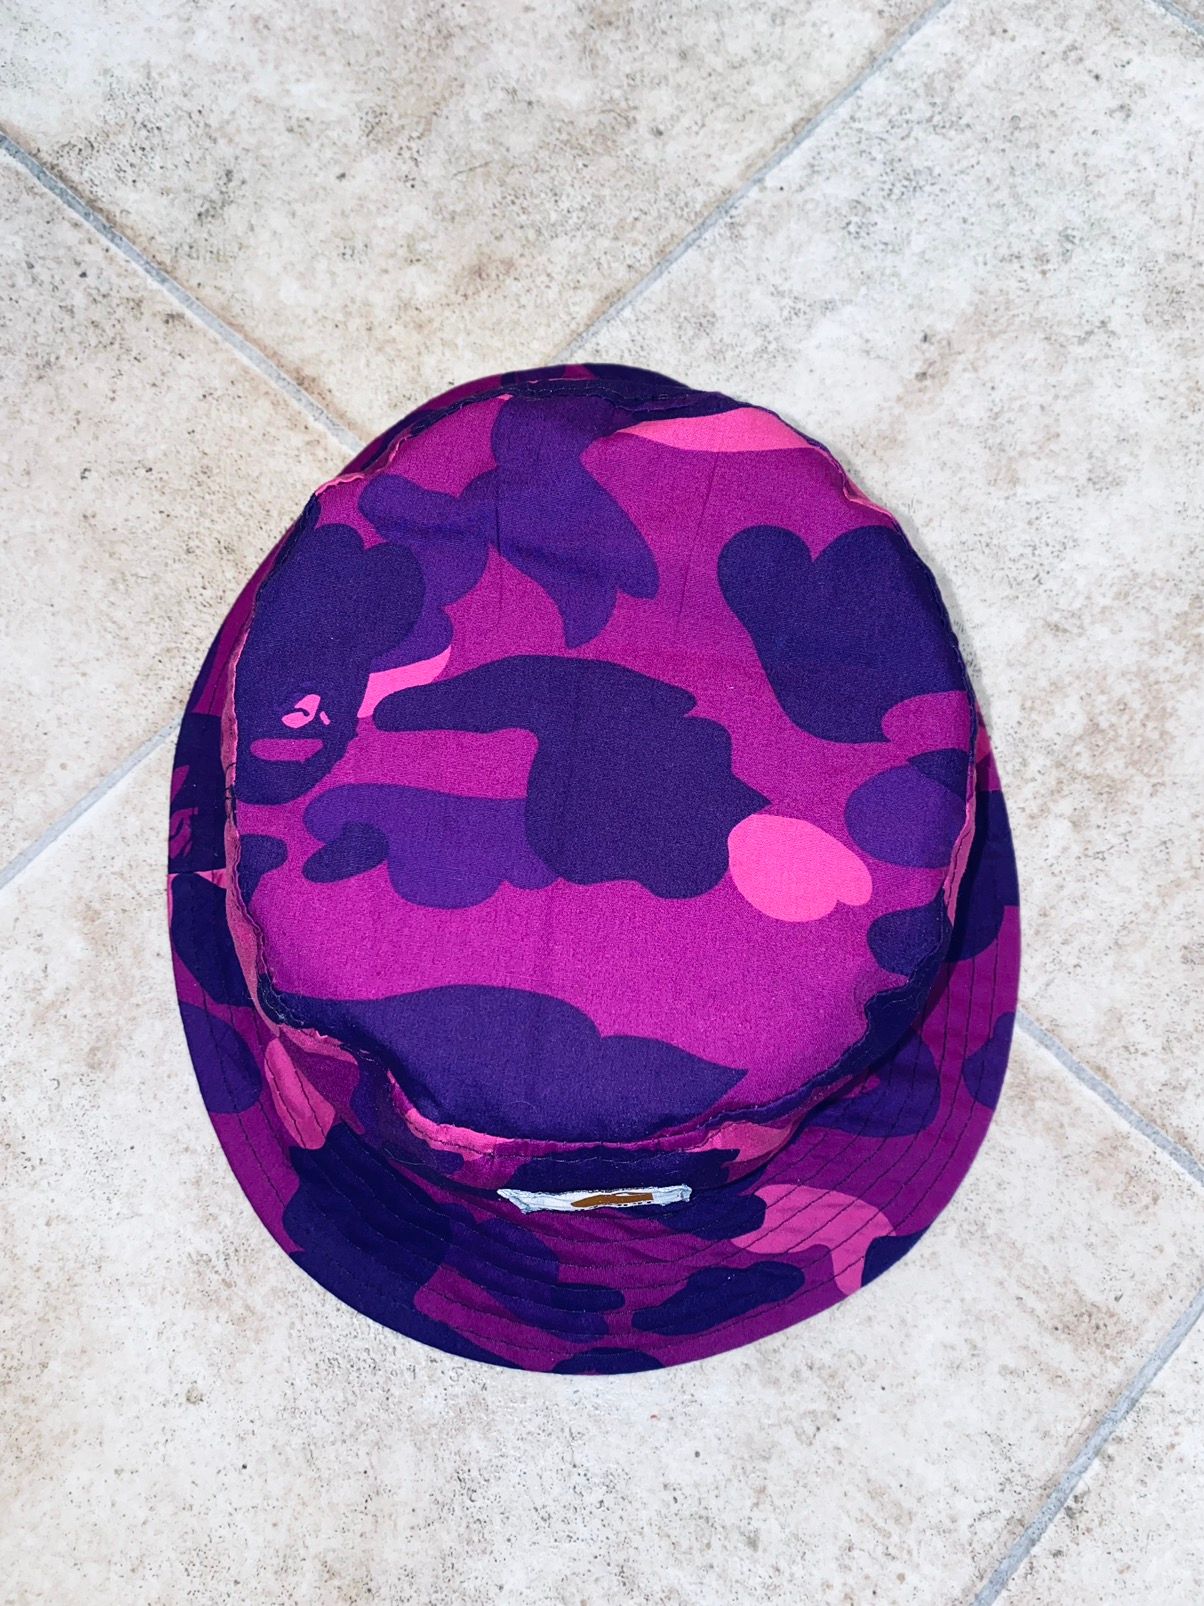 Carhartt Bape rework Camo Bucket Hat L Cav Empt Supreme Nigo Stussy Size ONE SIZE - 7 Preview